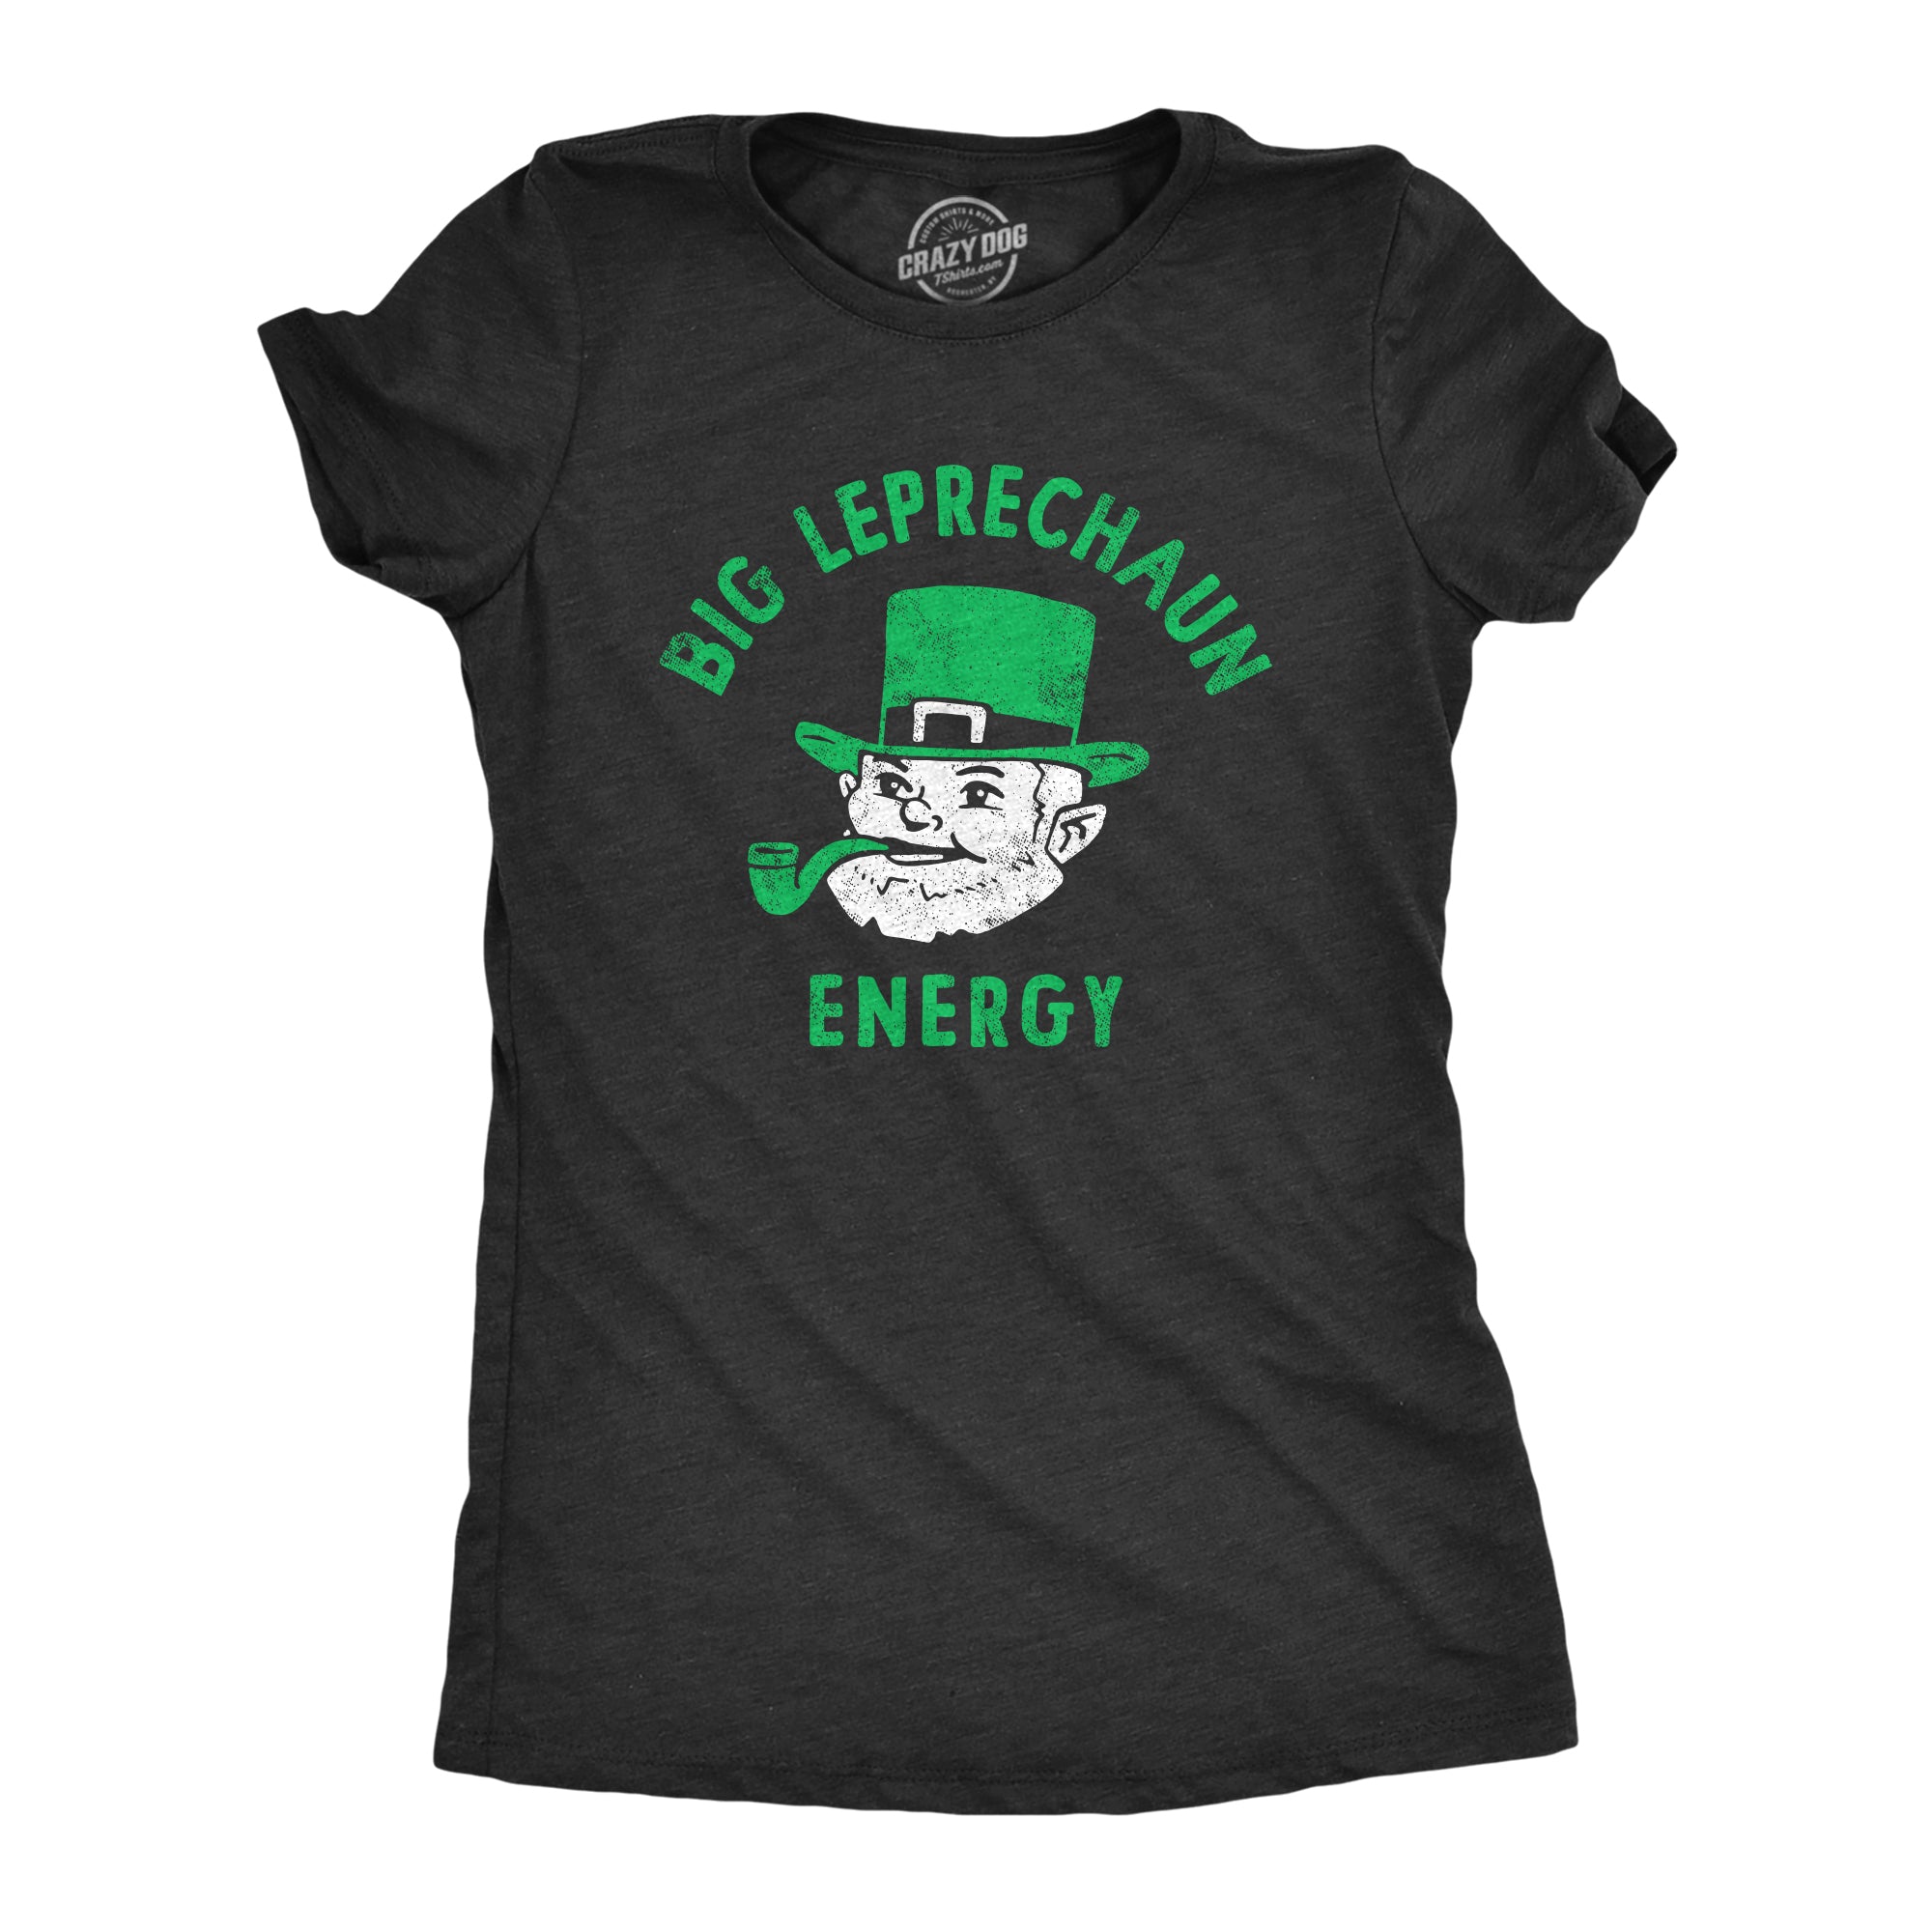 Funny Heather Black - ENERGY Big Leprechaun Energy Womens T Shirt Nerdy Saint Patrick's Day Tee